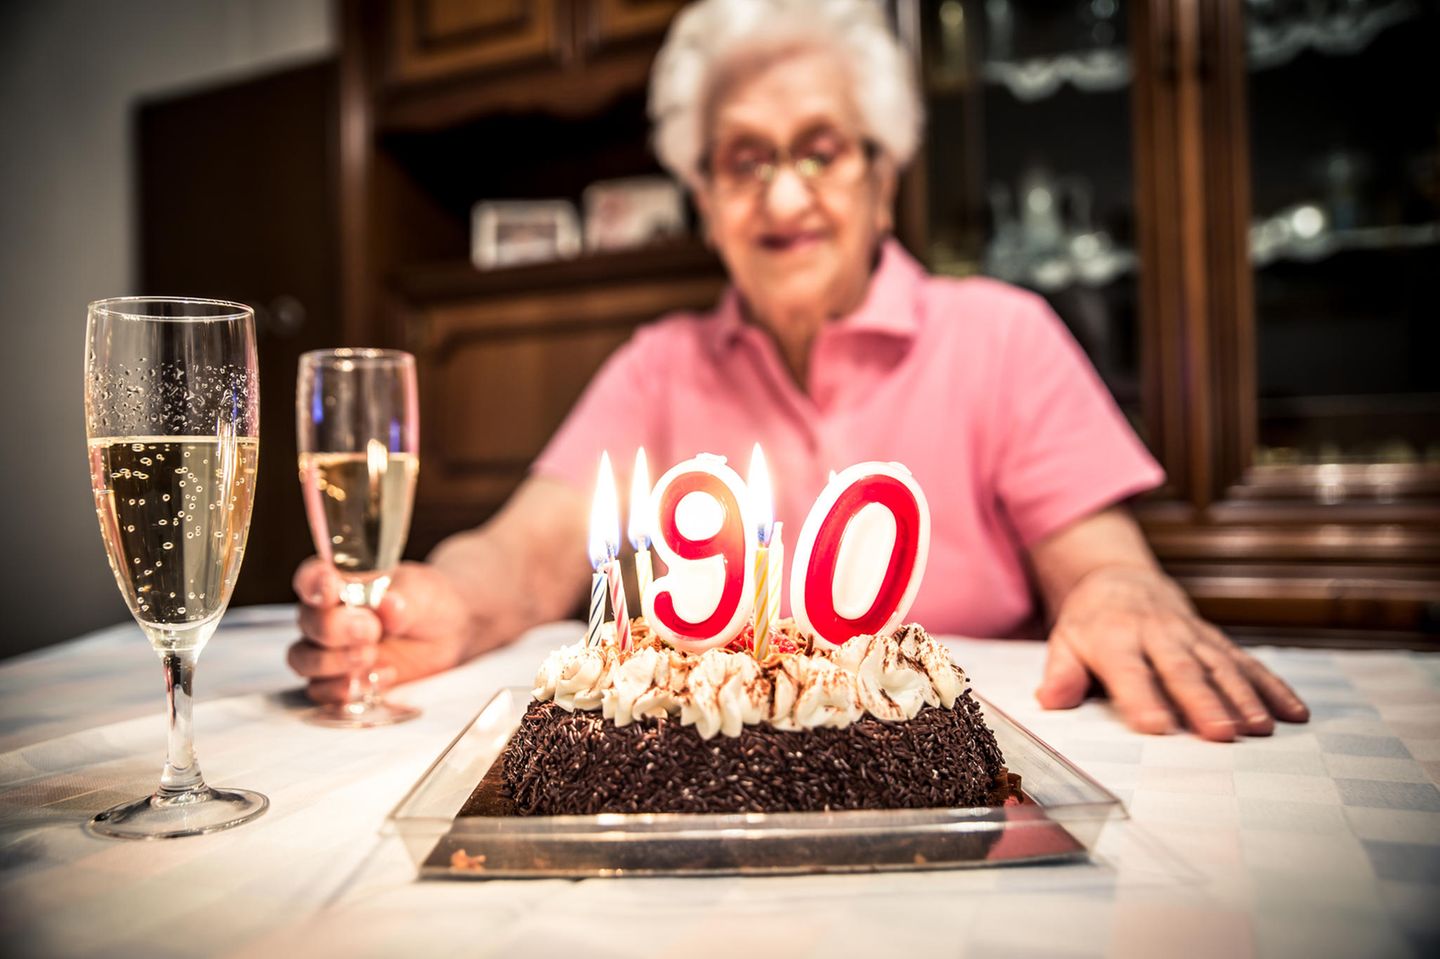 WHO: Omi feiert 90. Geburtstag